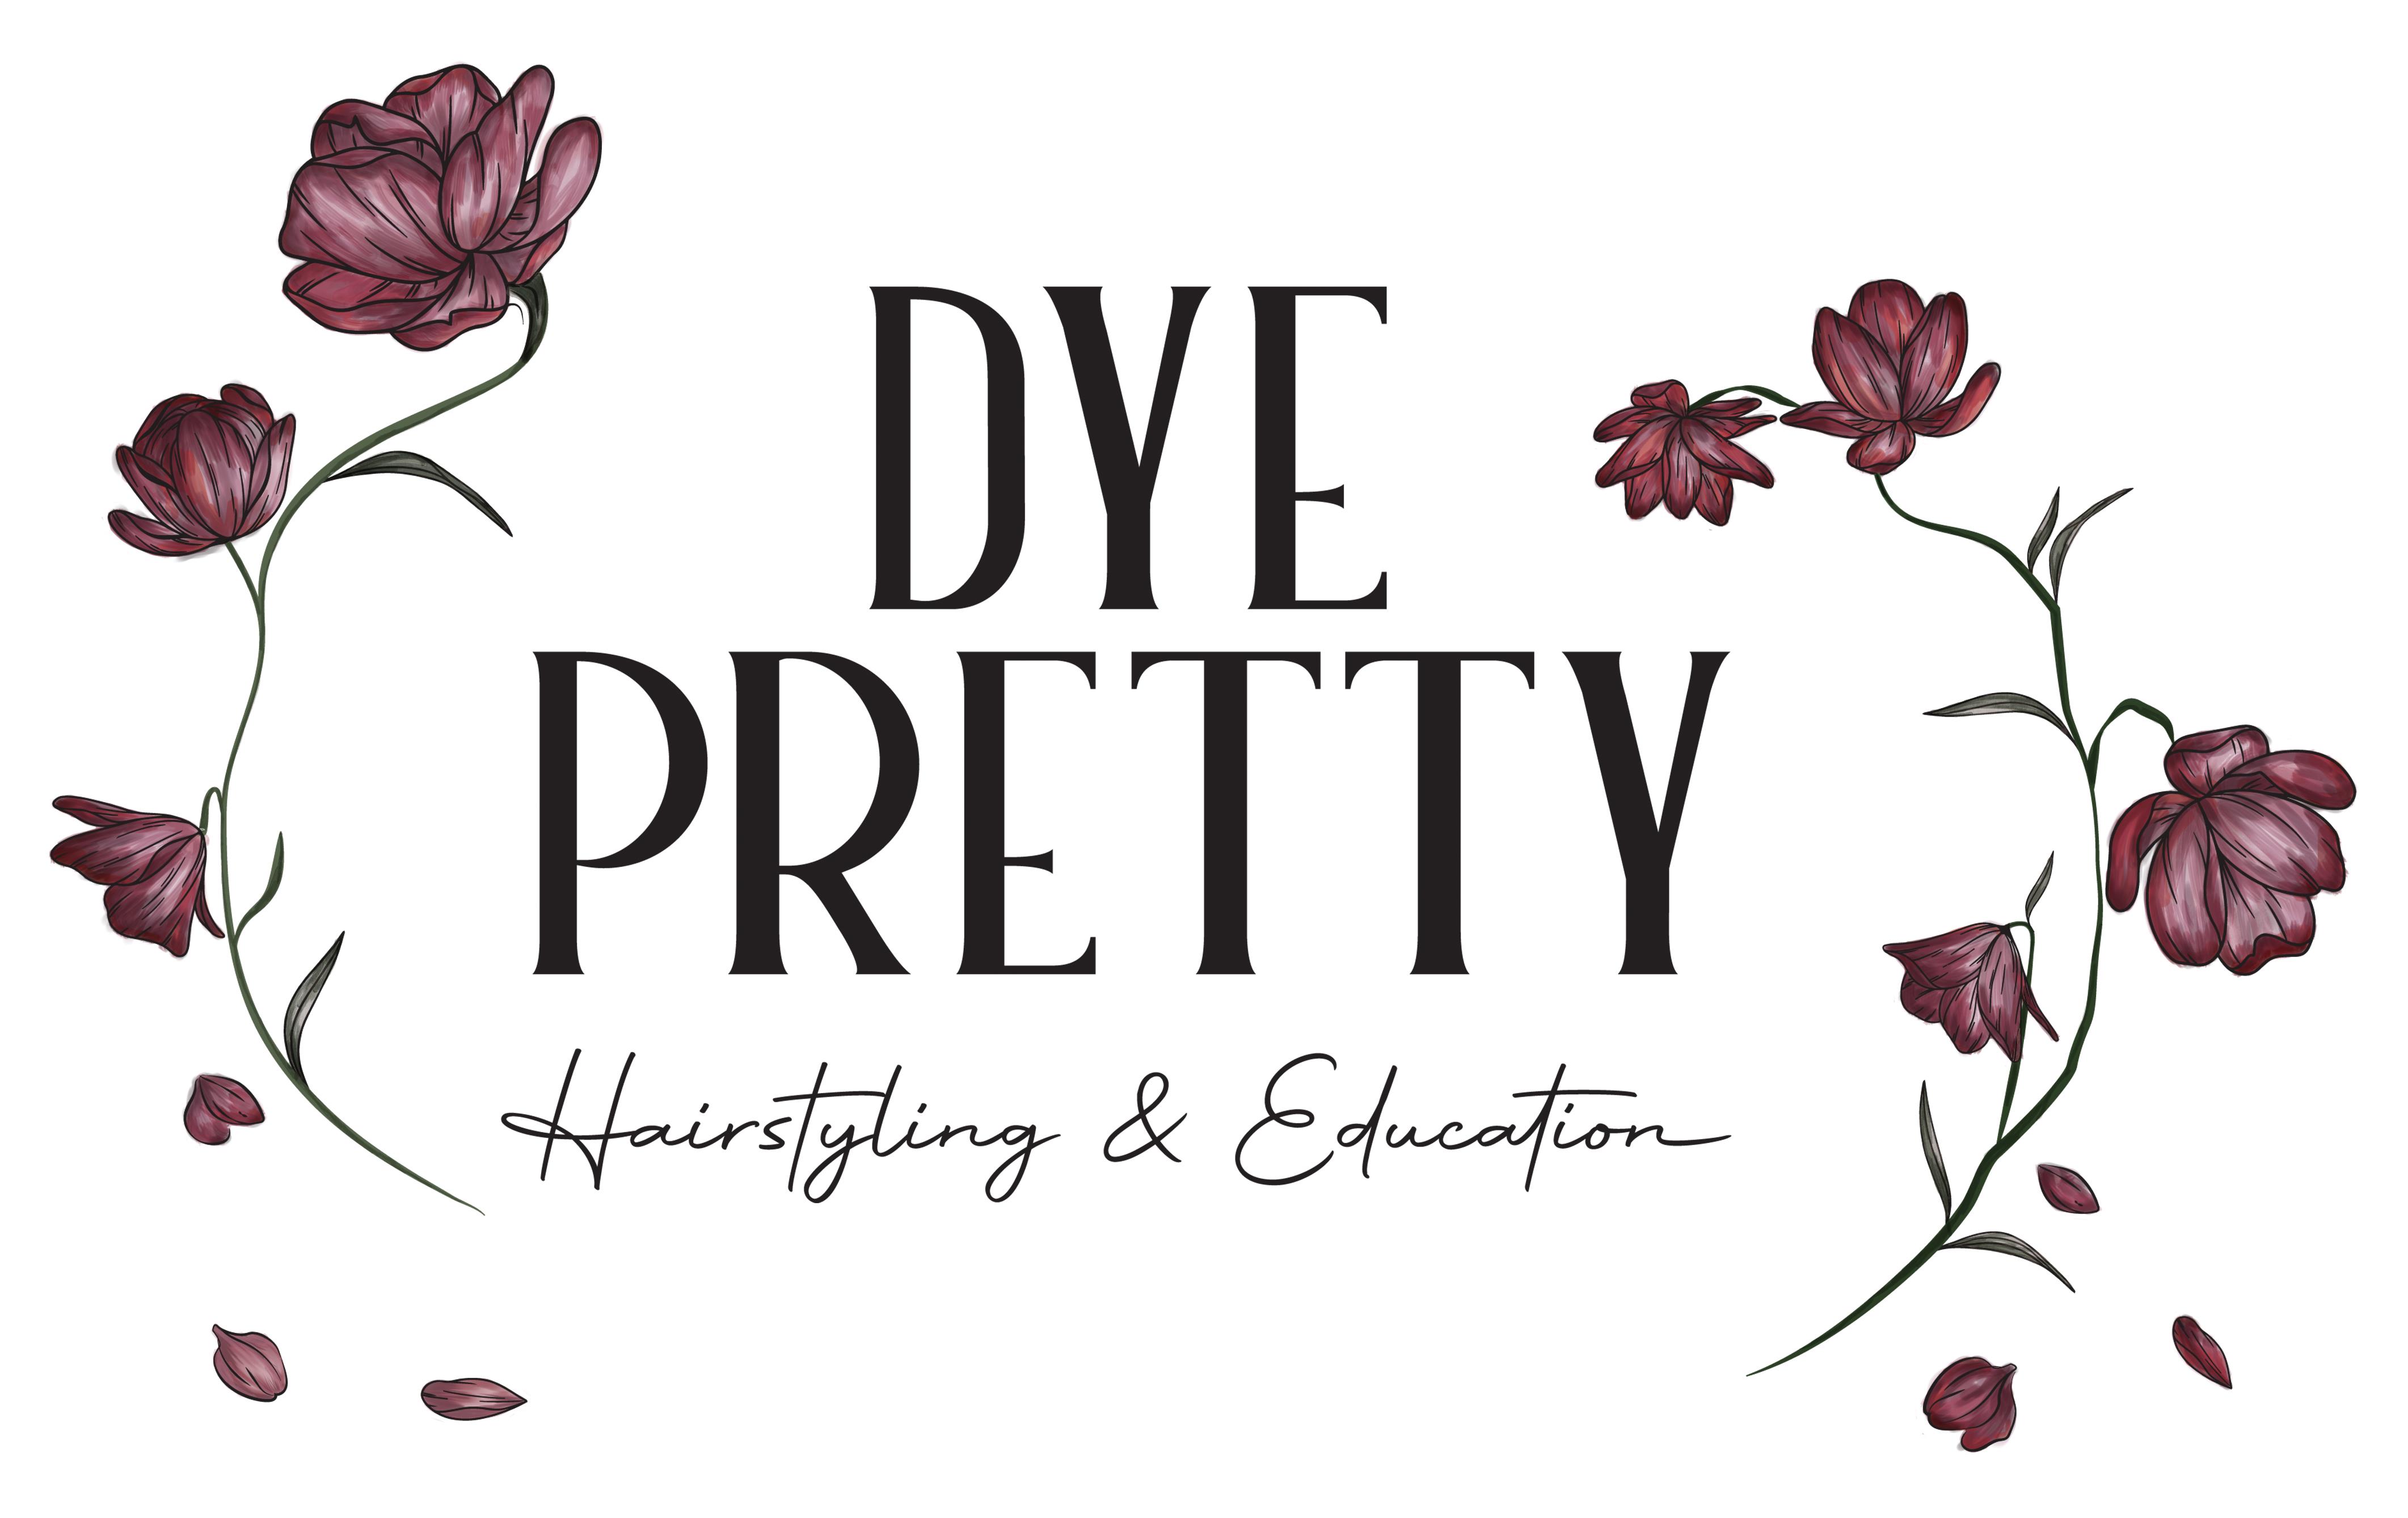 Dye Pretty Hairstyling & Education